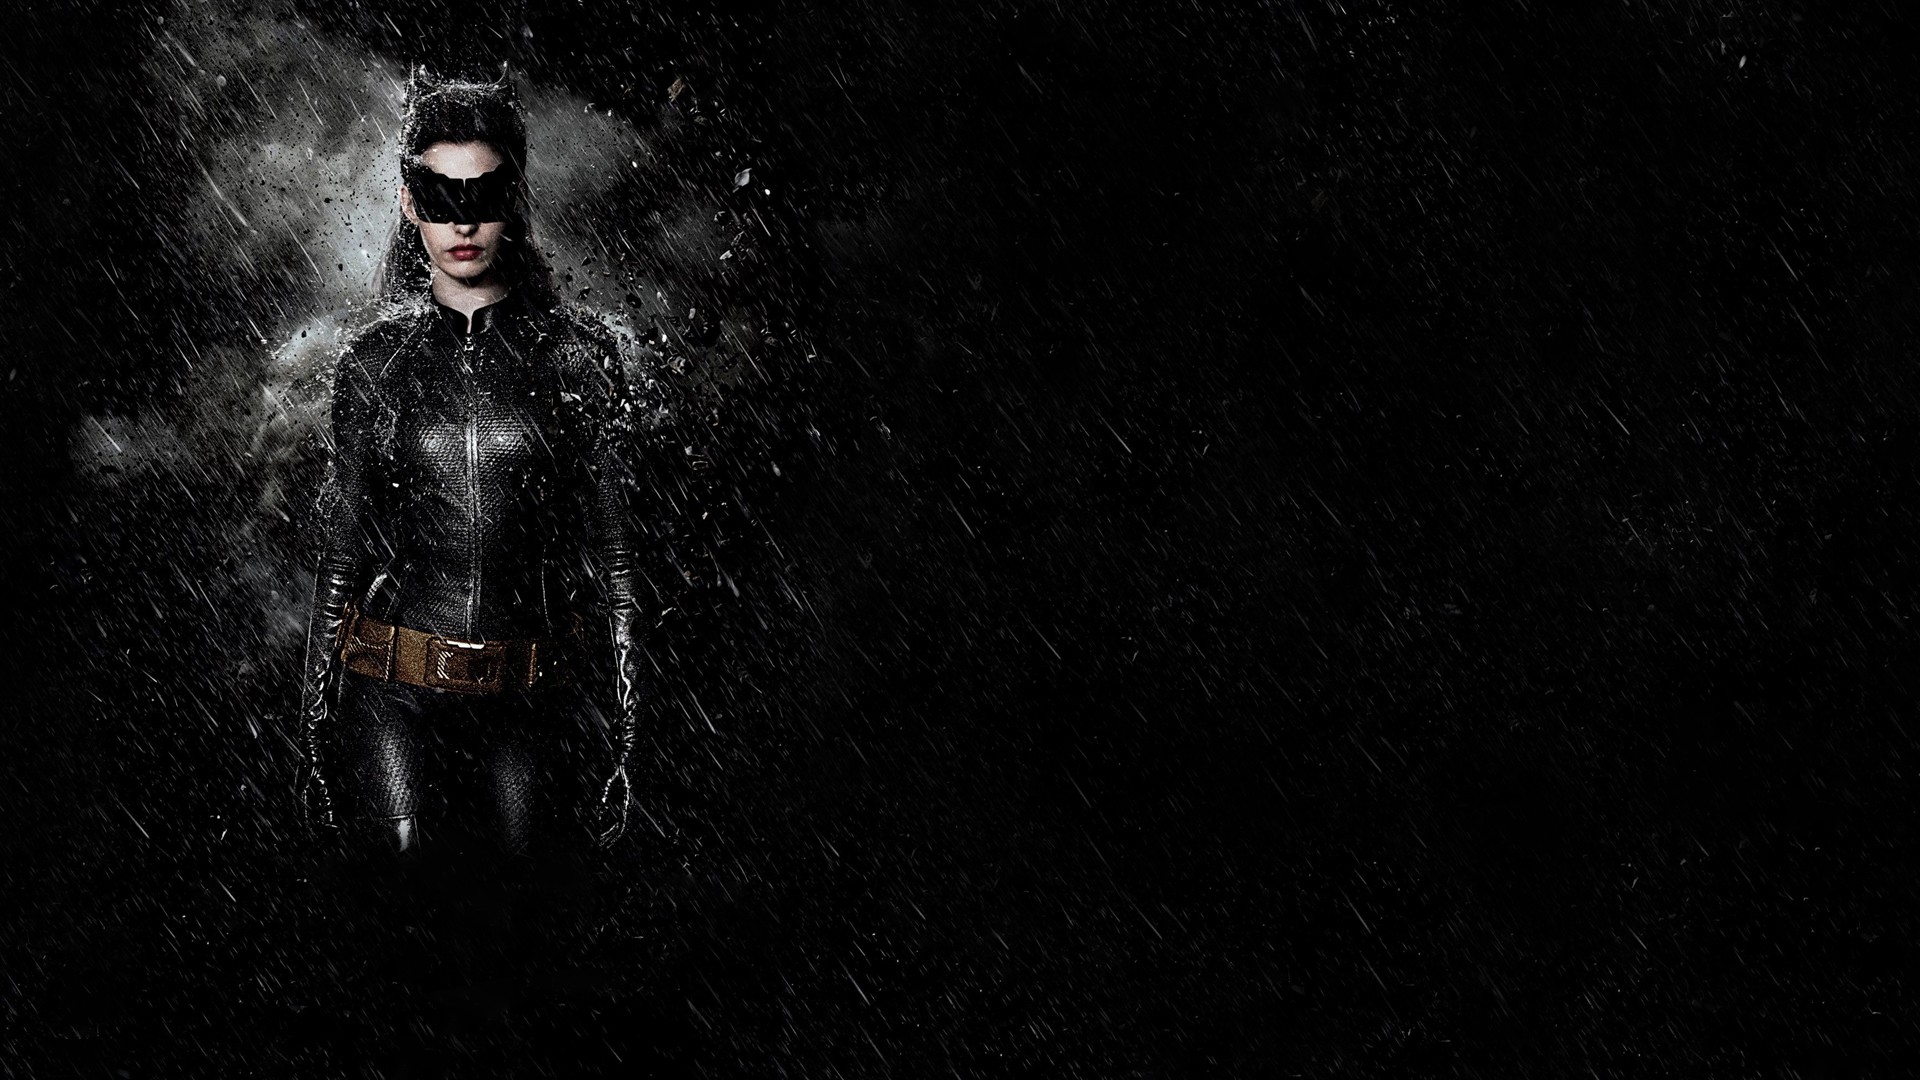 15 Batman The Dark Knight Rises Wallpapers   DezineGuide